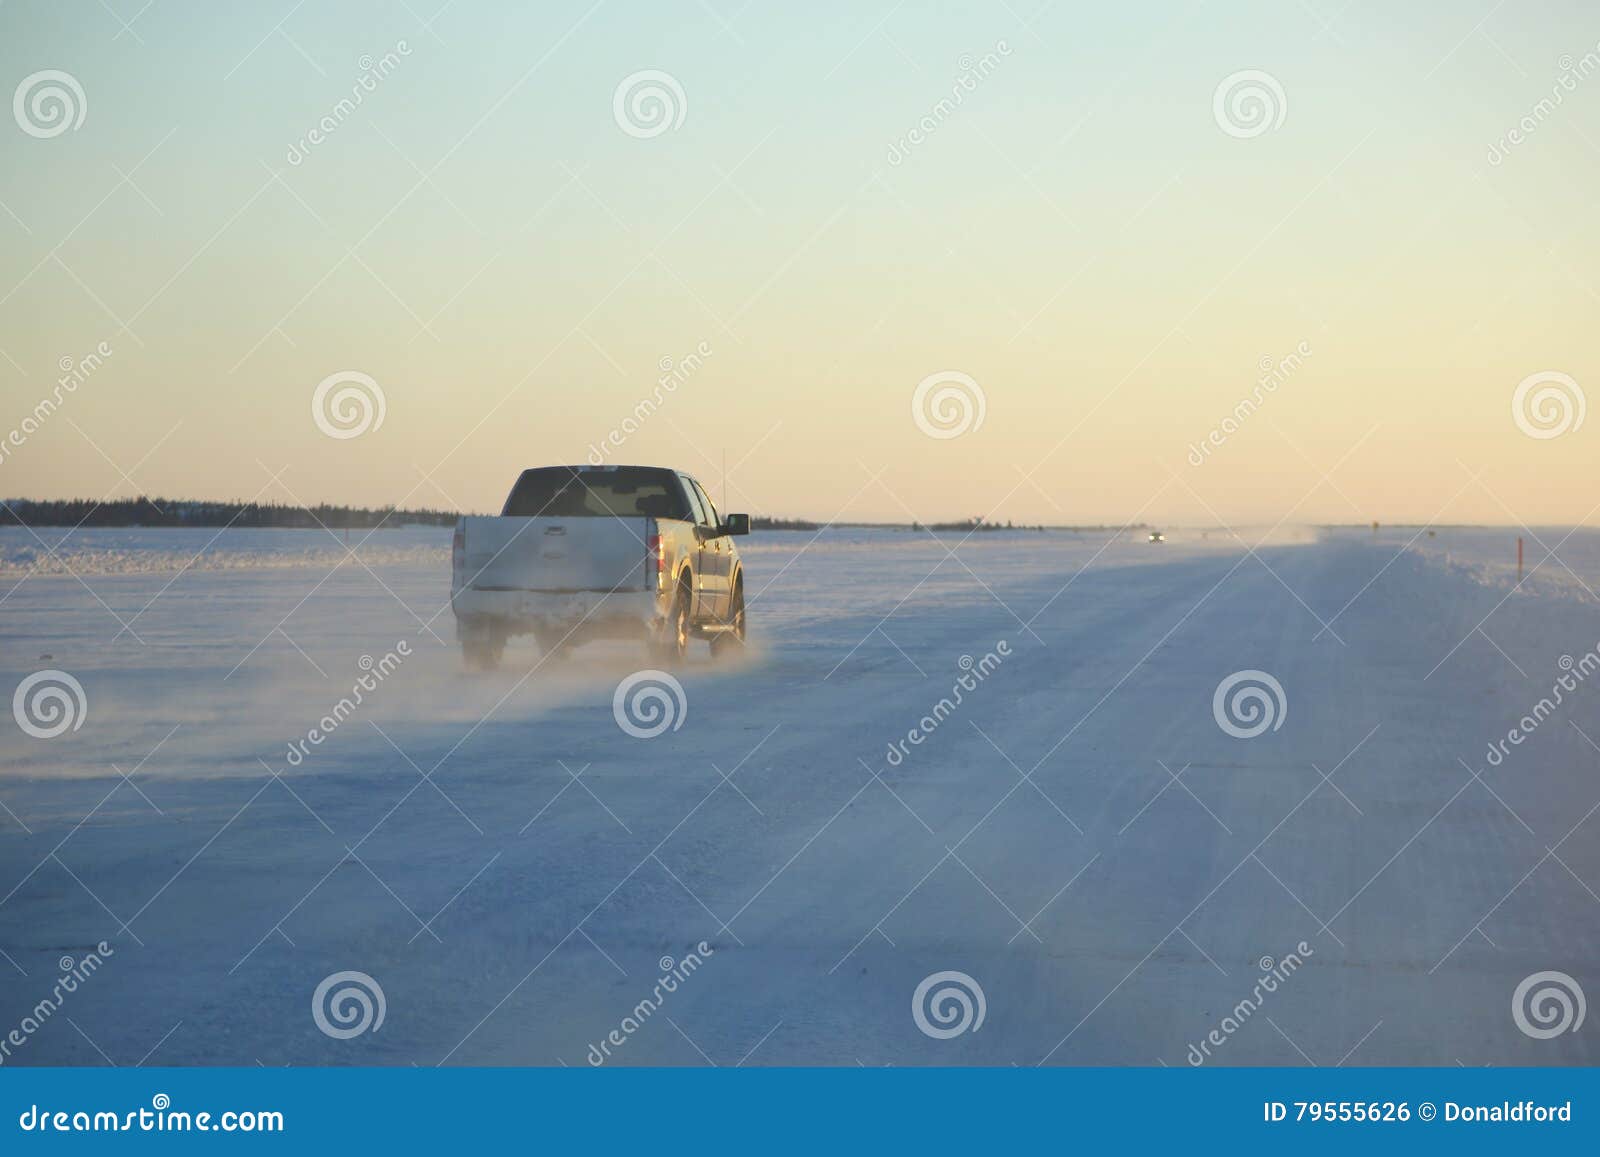 half tun pickup on ice road, yellowknife, canada